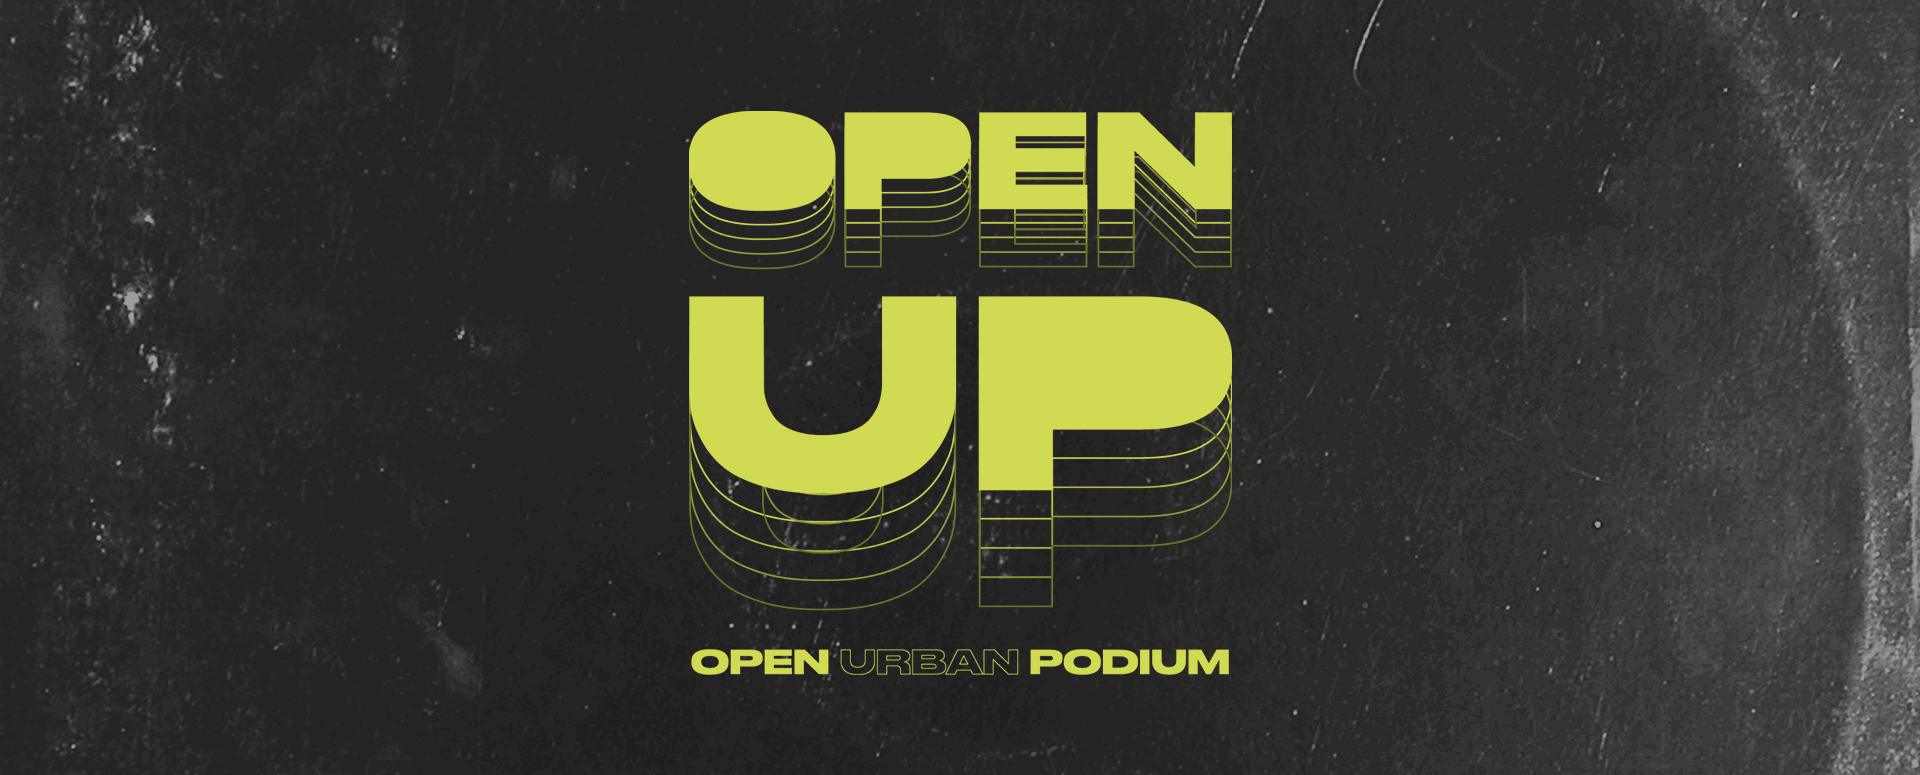 Open Up: Open Urban Podium